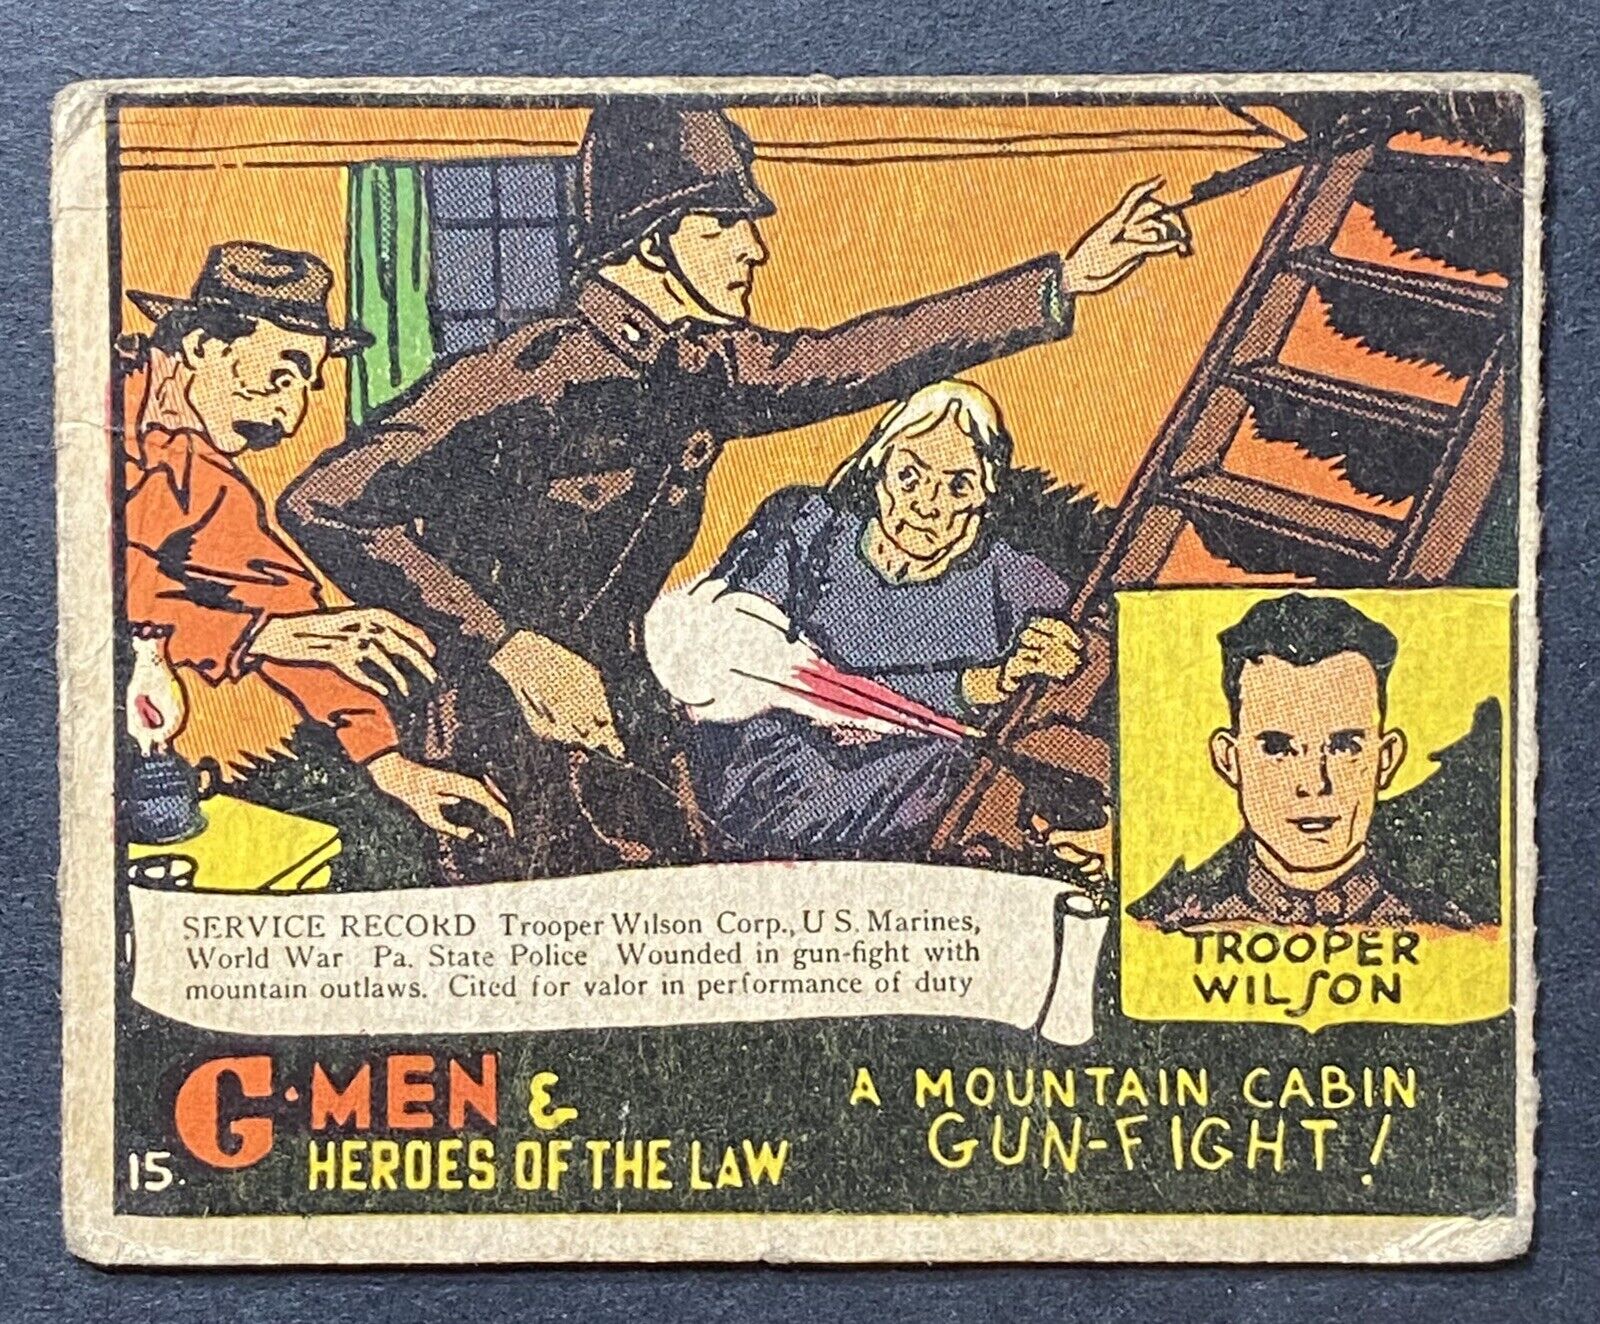 1936 G-Men & Heroes of the Law #15 Mountain Cabin Gun Fight Low Grade